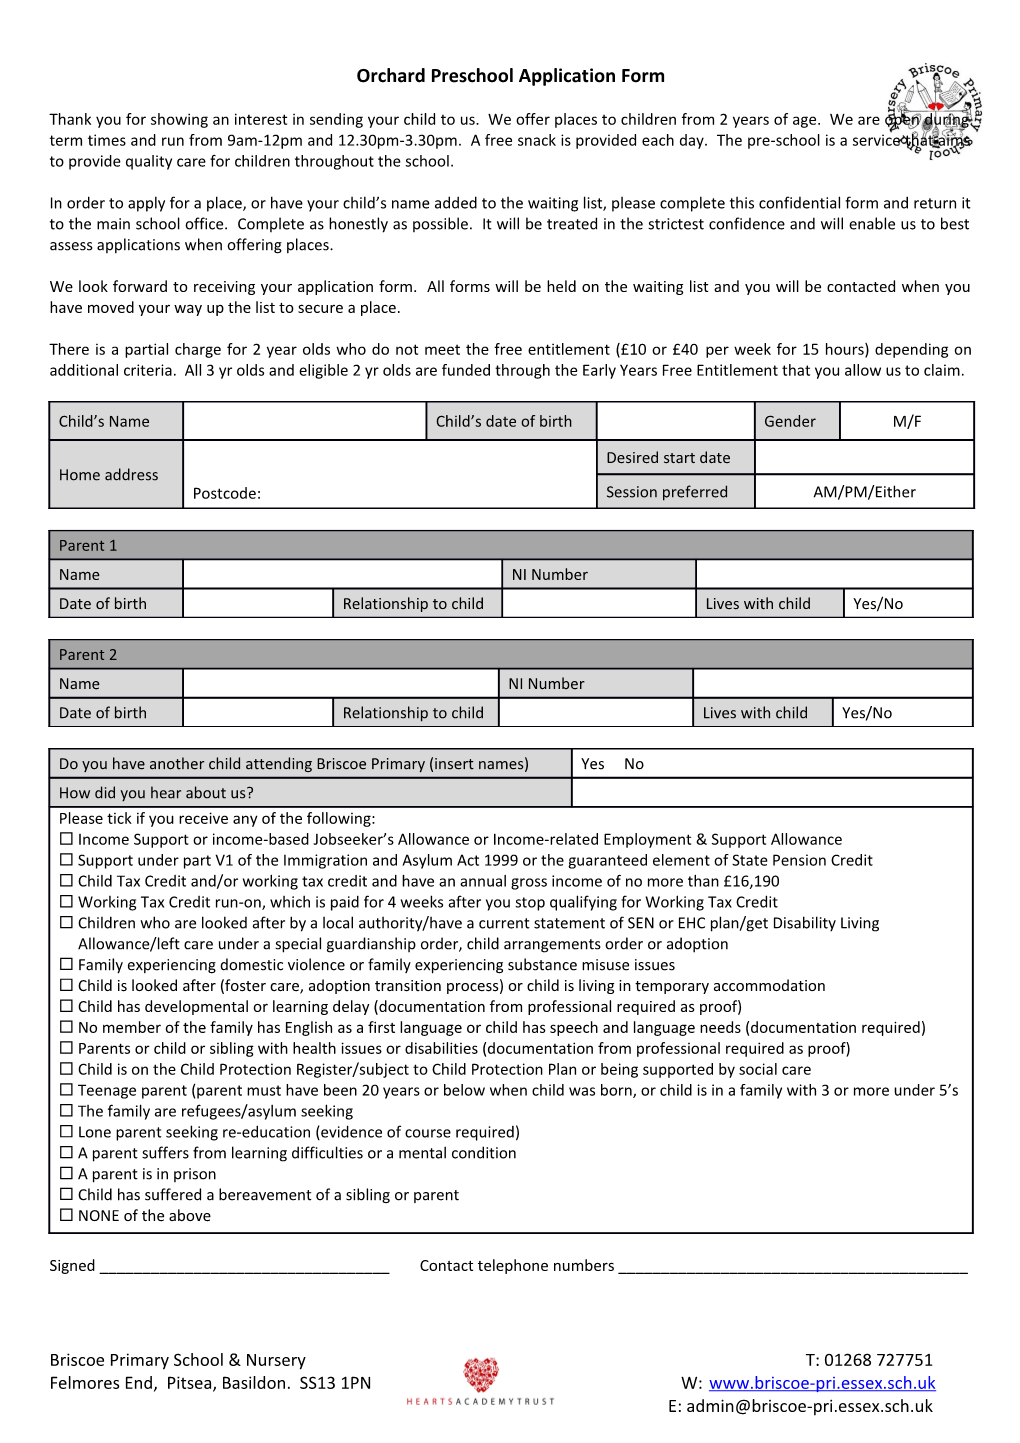 Orchard Preschool Application Form